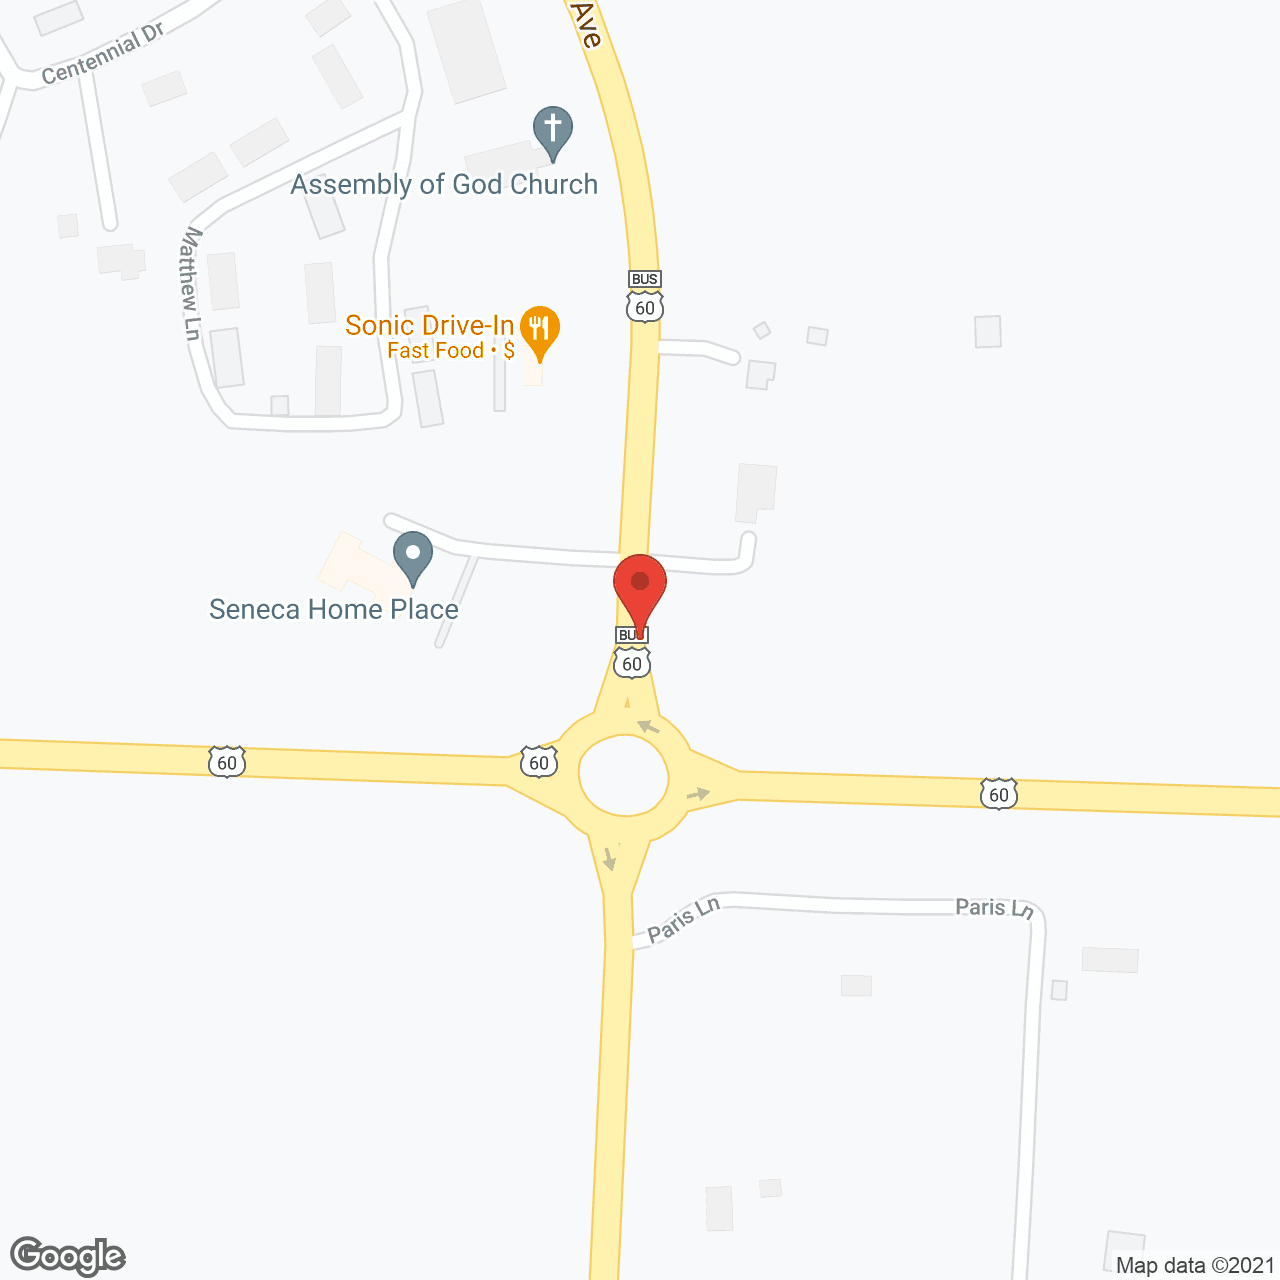 Seneca Home Place in google map